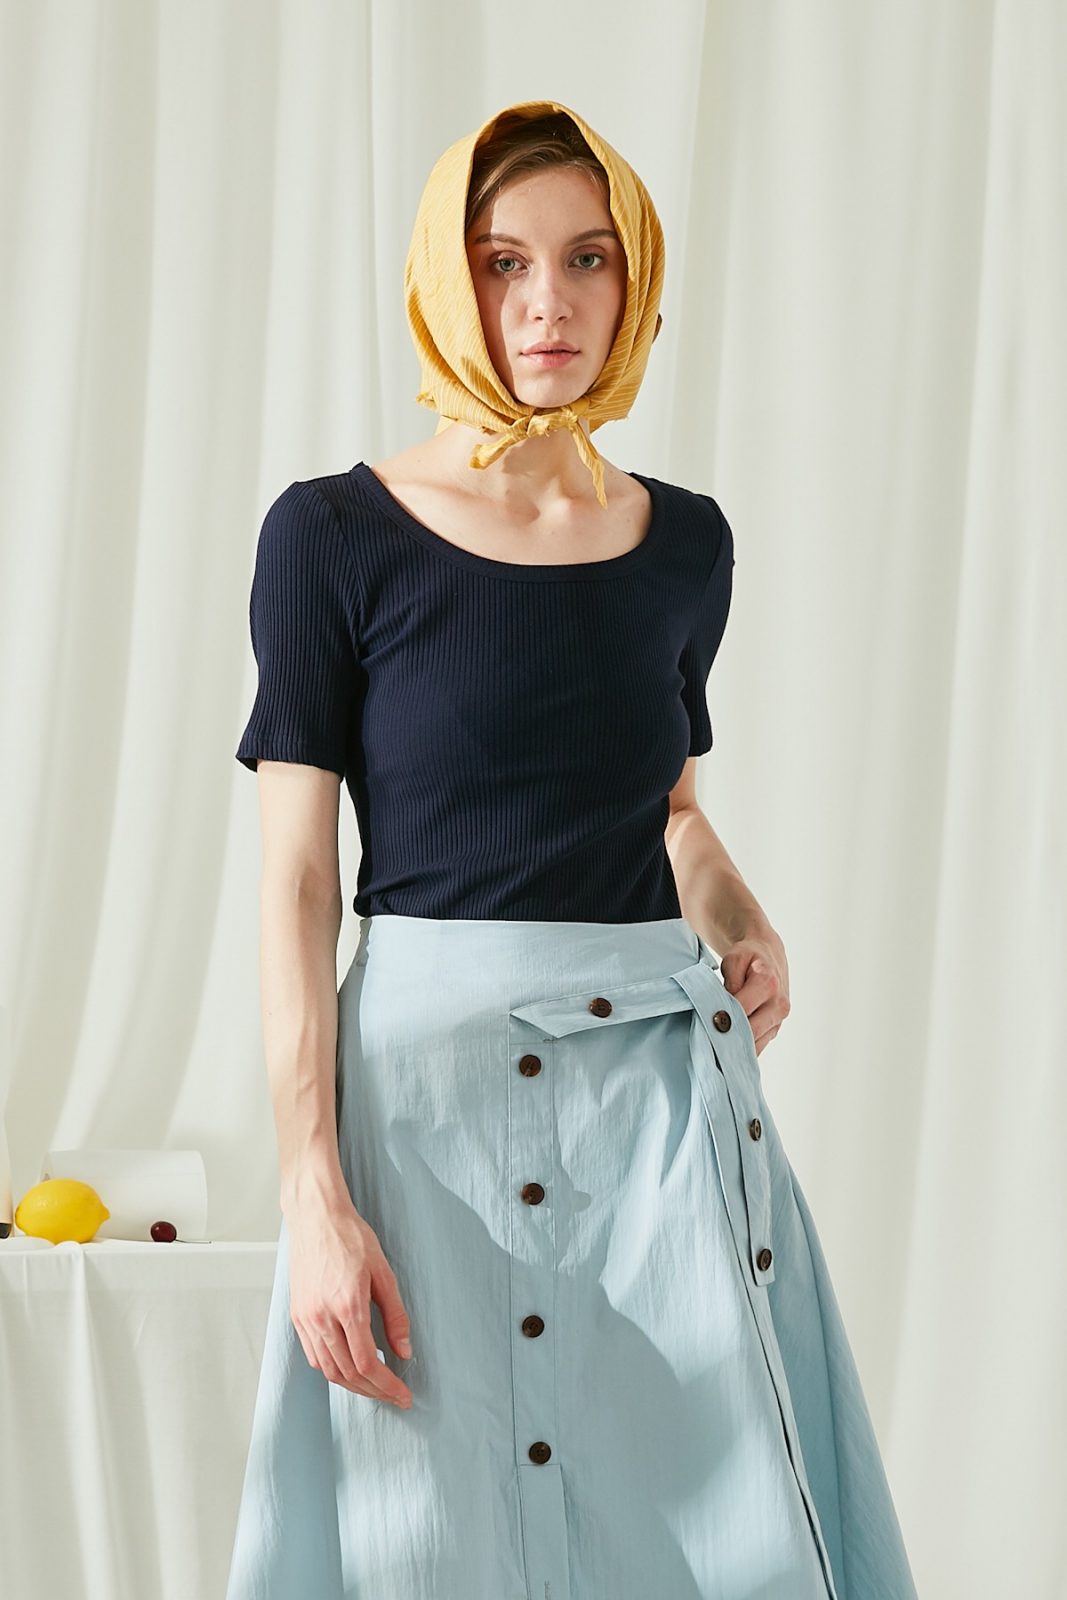 SKYE San Francisco SF ethical modern minimalist quality women clothing fashion Elissa Stretch Knit Cotton Top blue 5